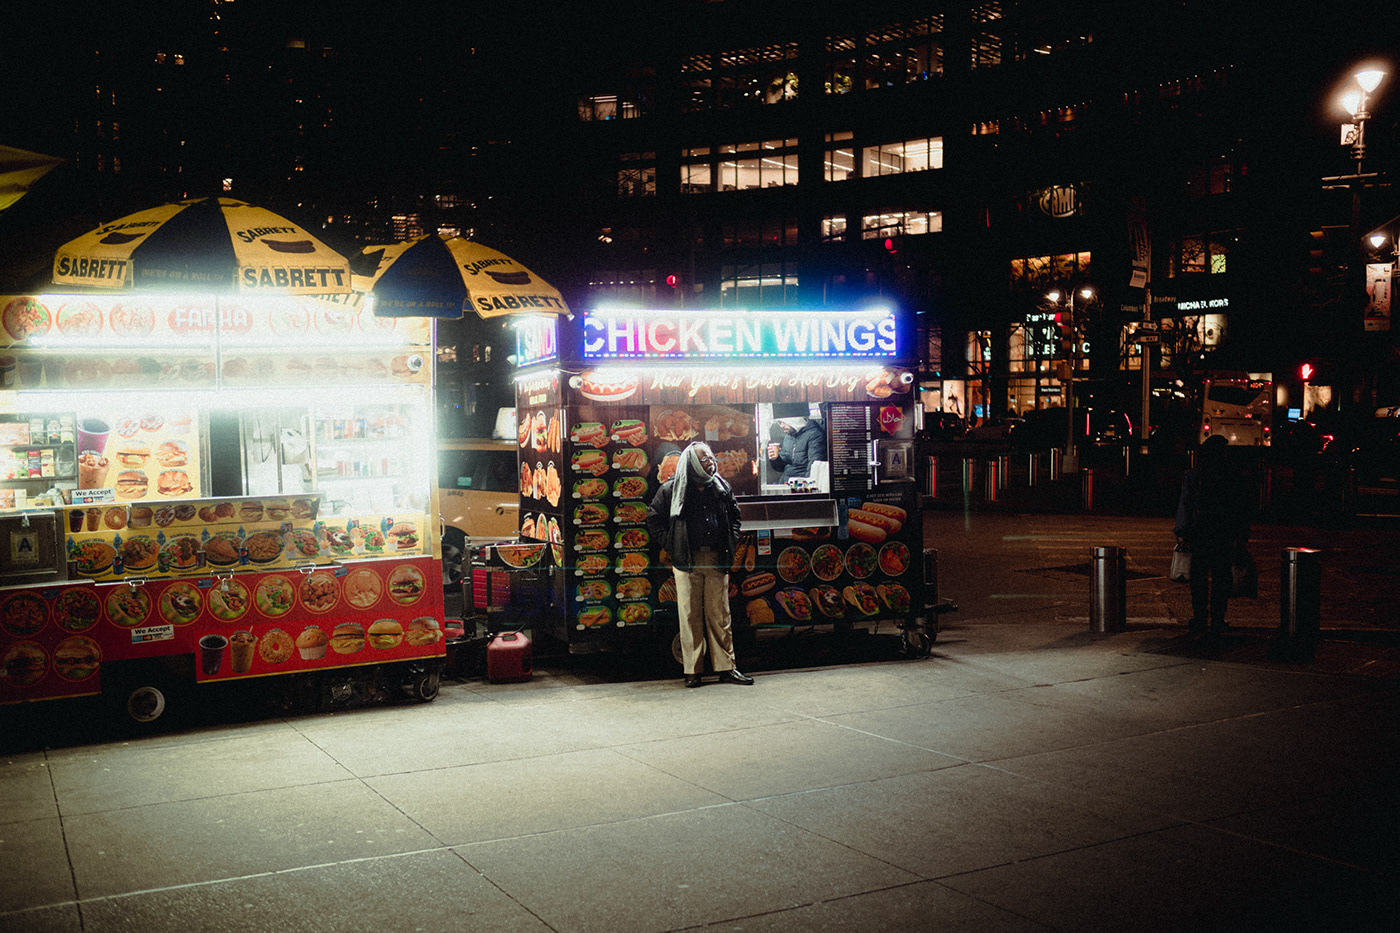 bnw Leica Leica camera mood moodboard New York new york city nyc Photography  Travel